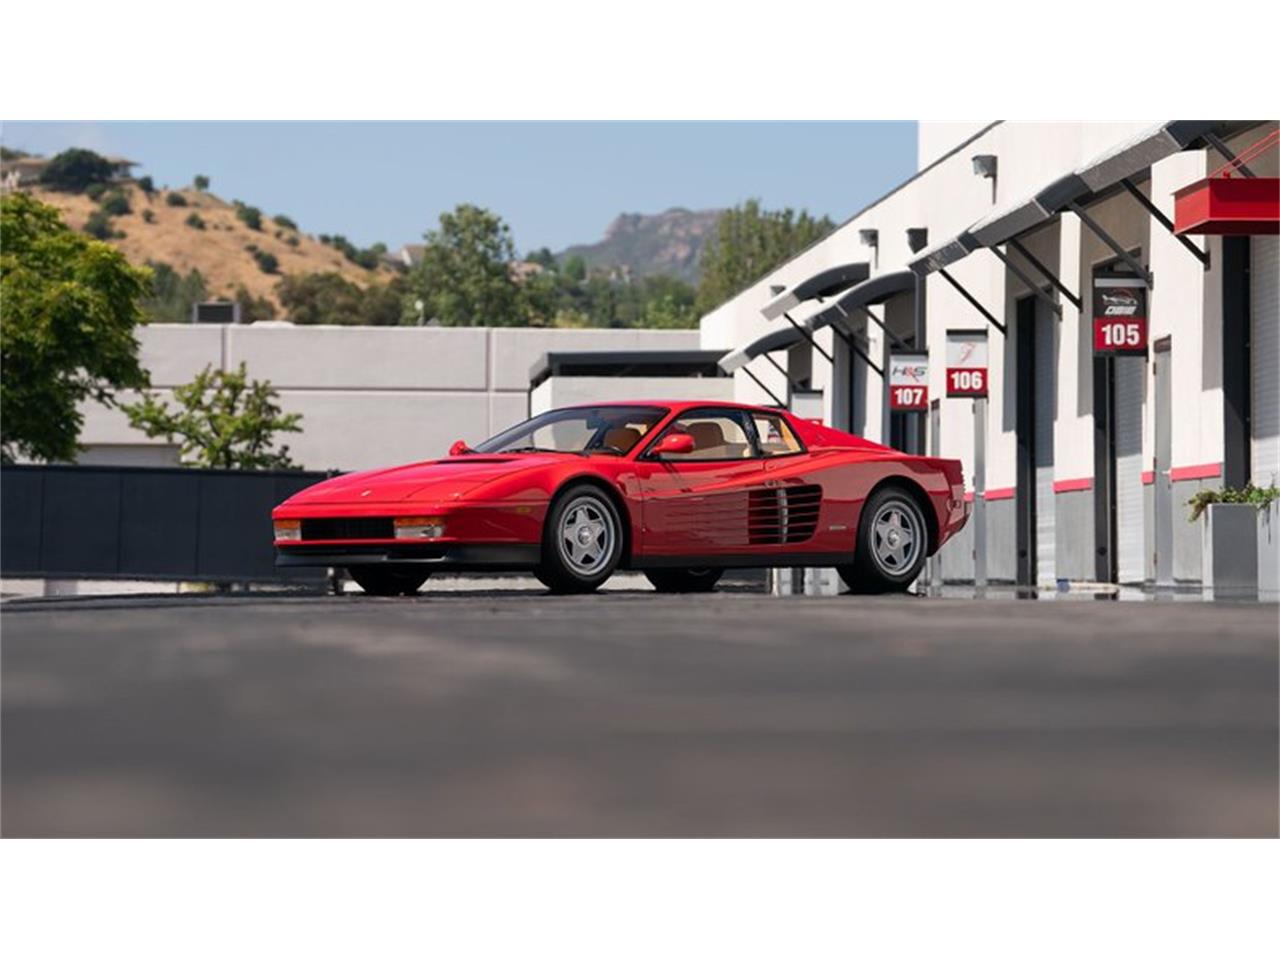 For Sale at Auction: 1987 Ferrari Testarossa in Monterey, California for sale in Monterey, CA